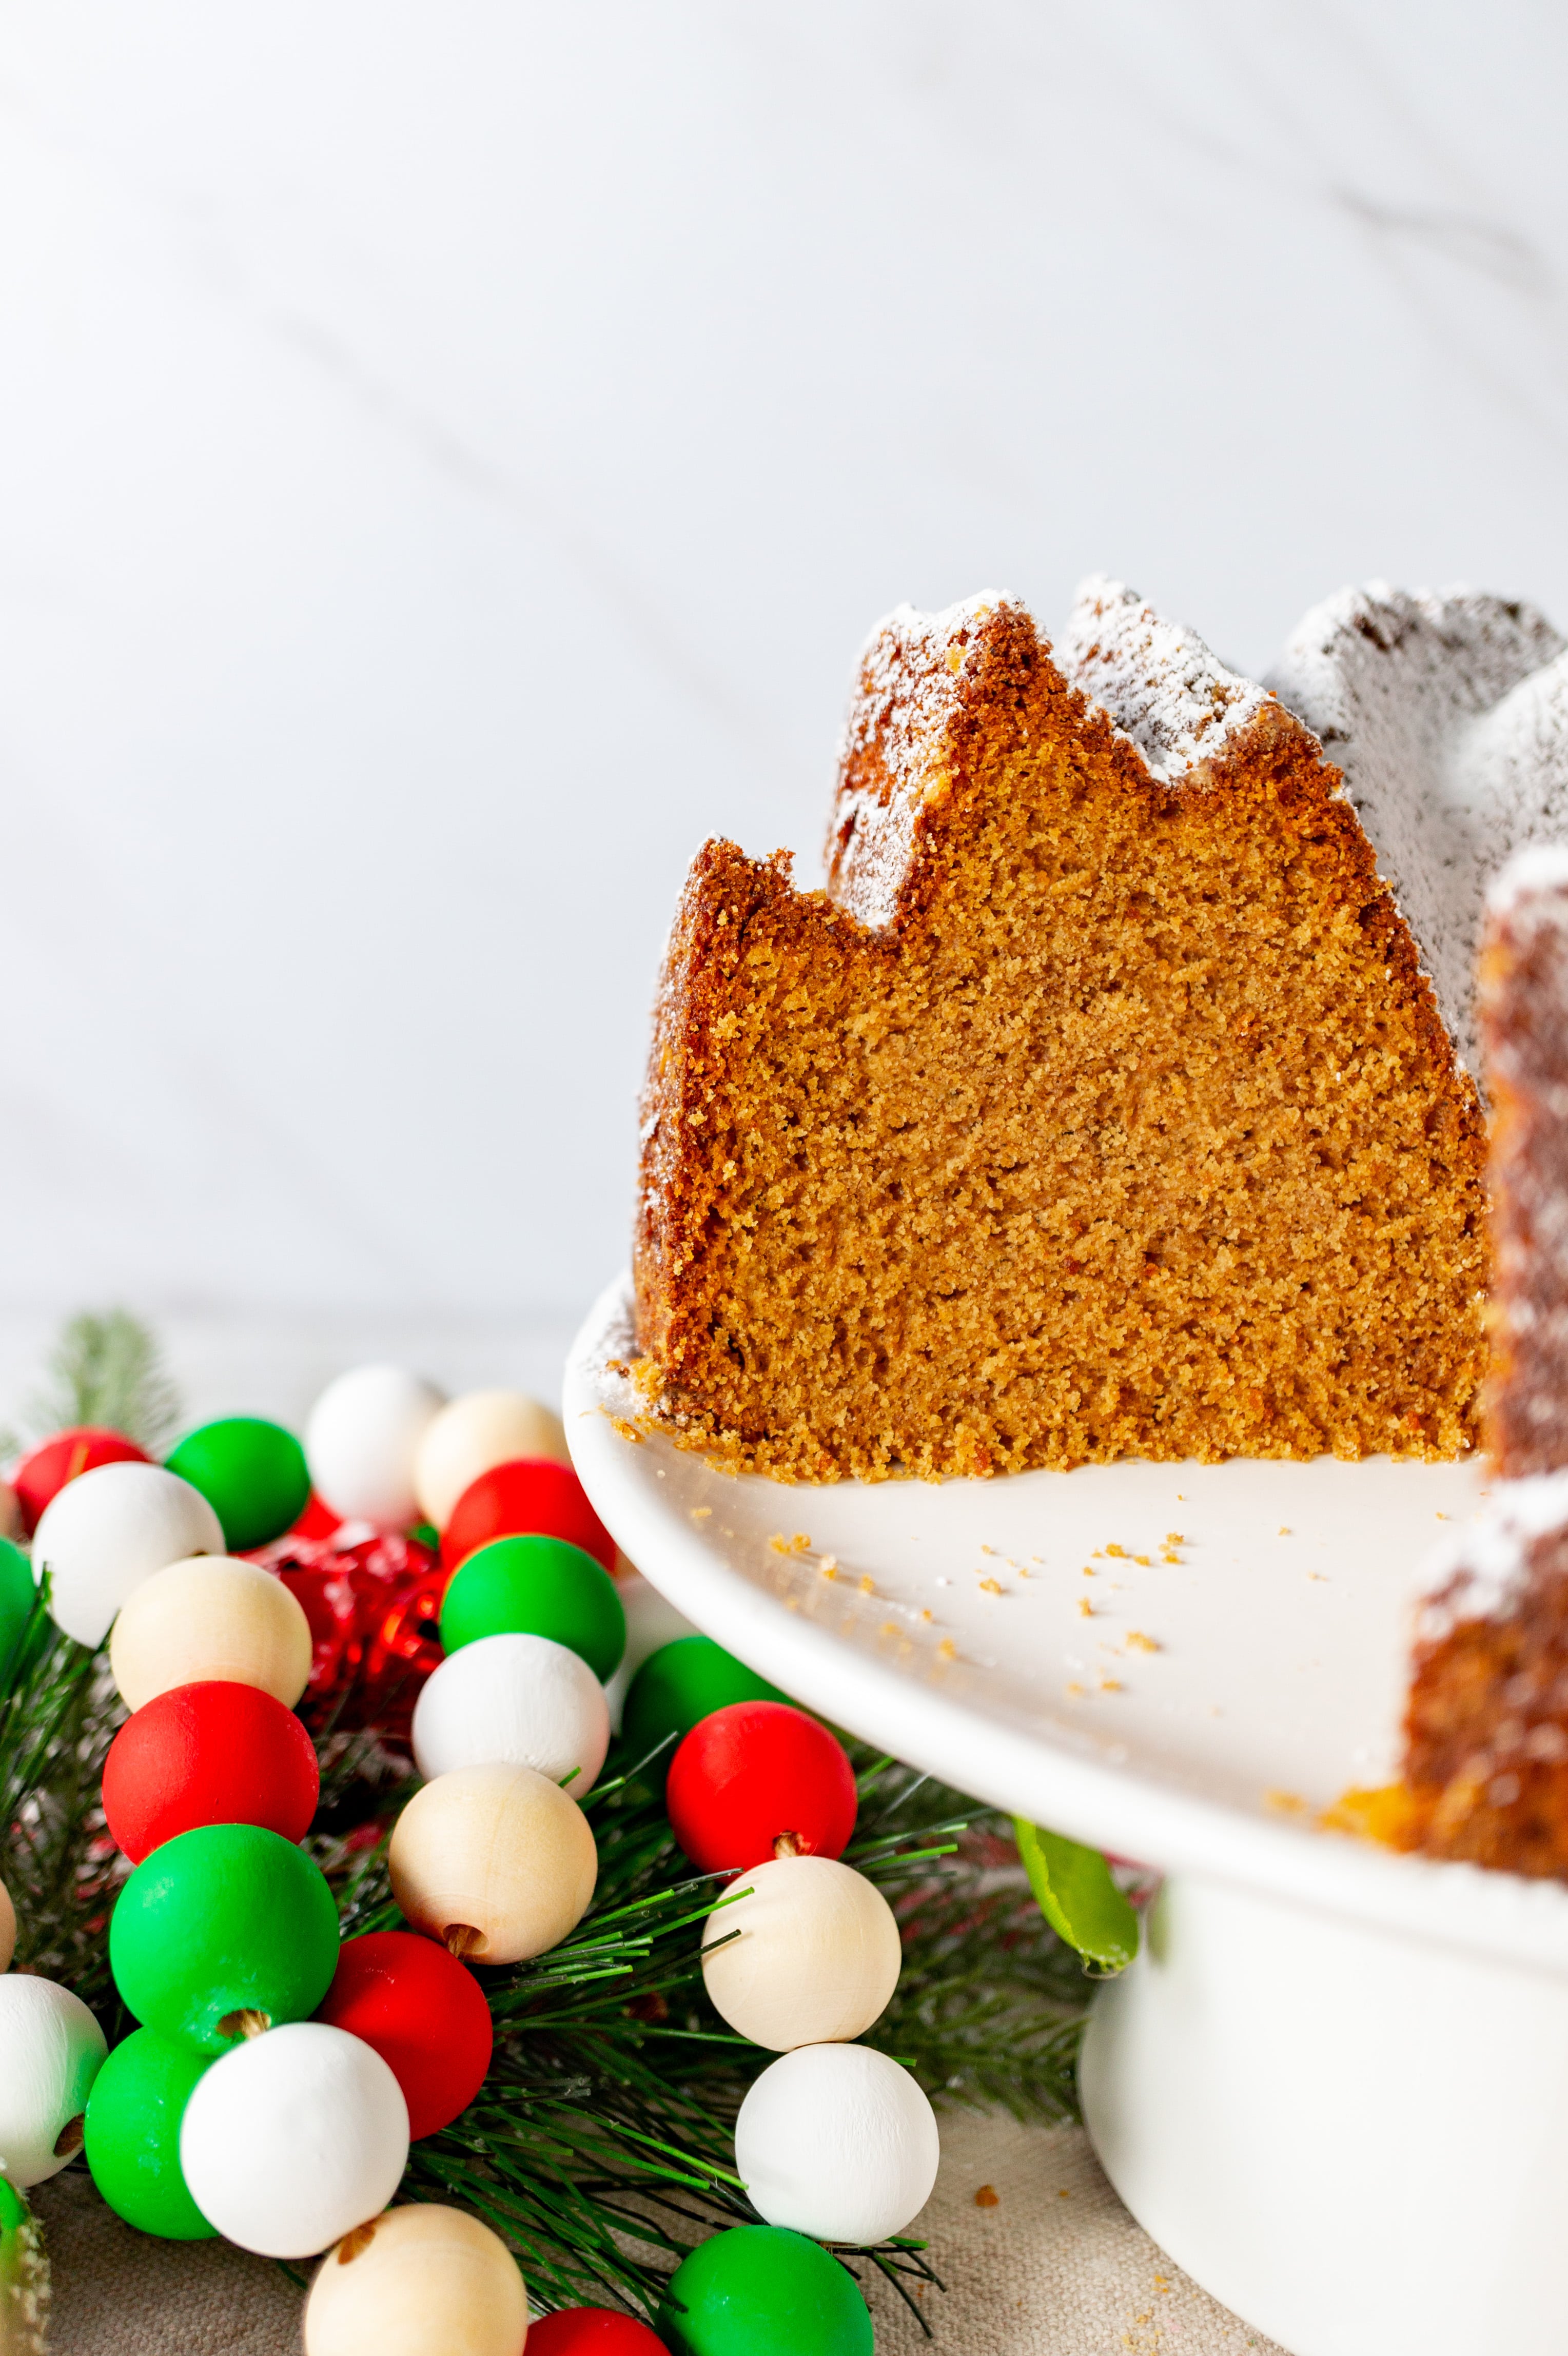 https://owlbbaking.com/wp-content/uploads/2020/11/Gingerbread-Bundt-Cake-inside-shot-with-beads-2-scaled.jpg